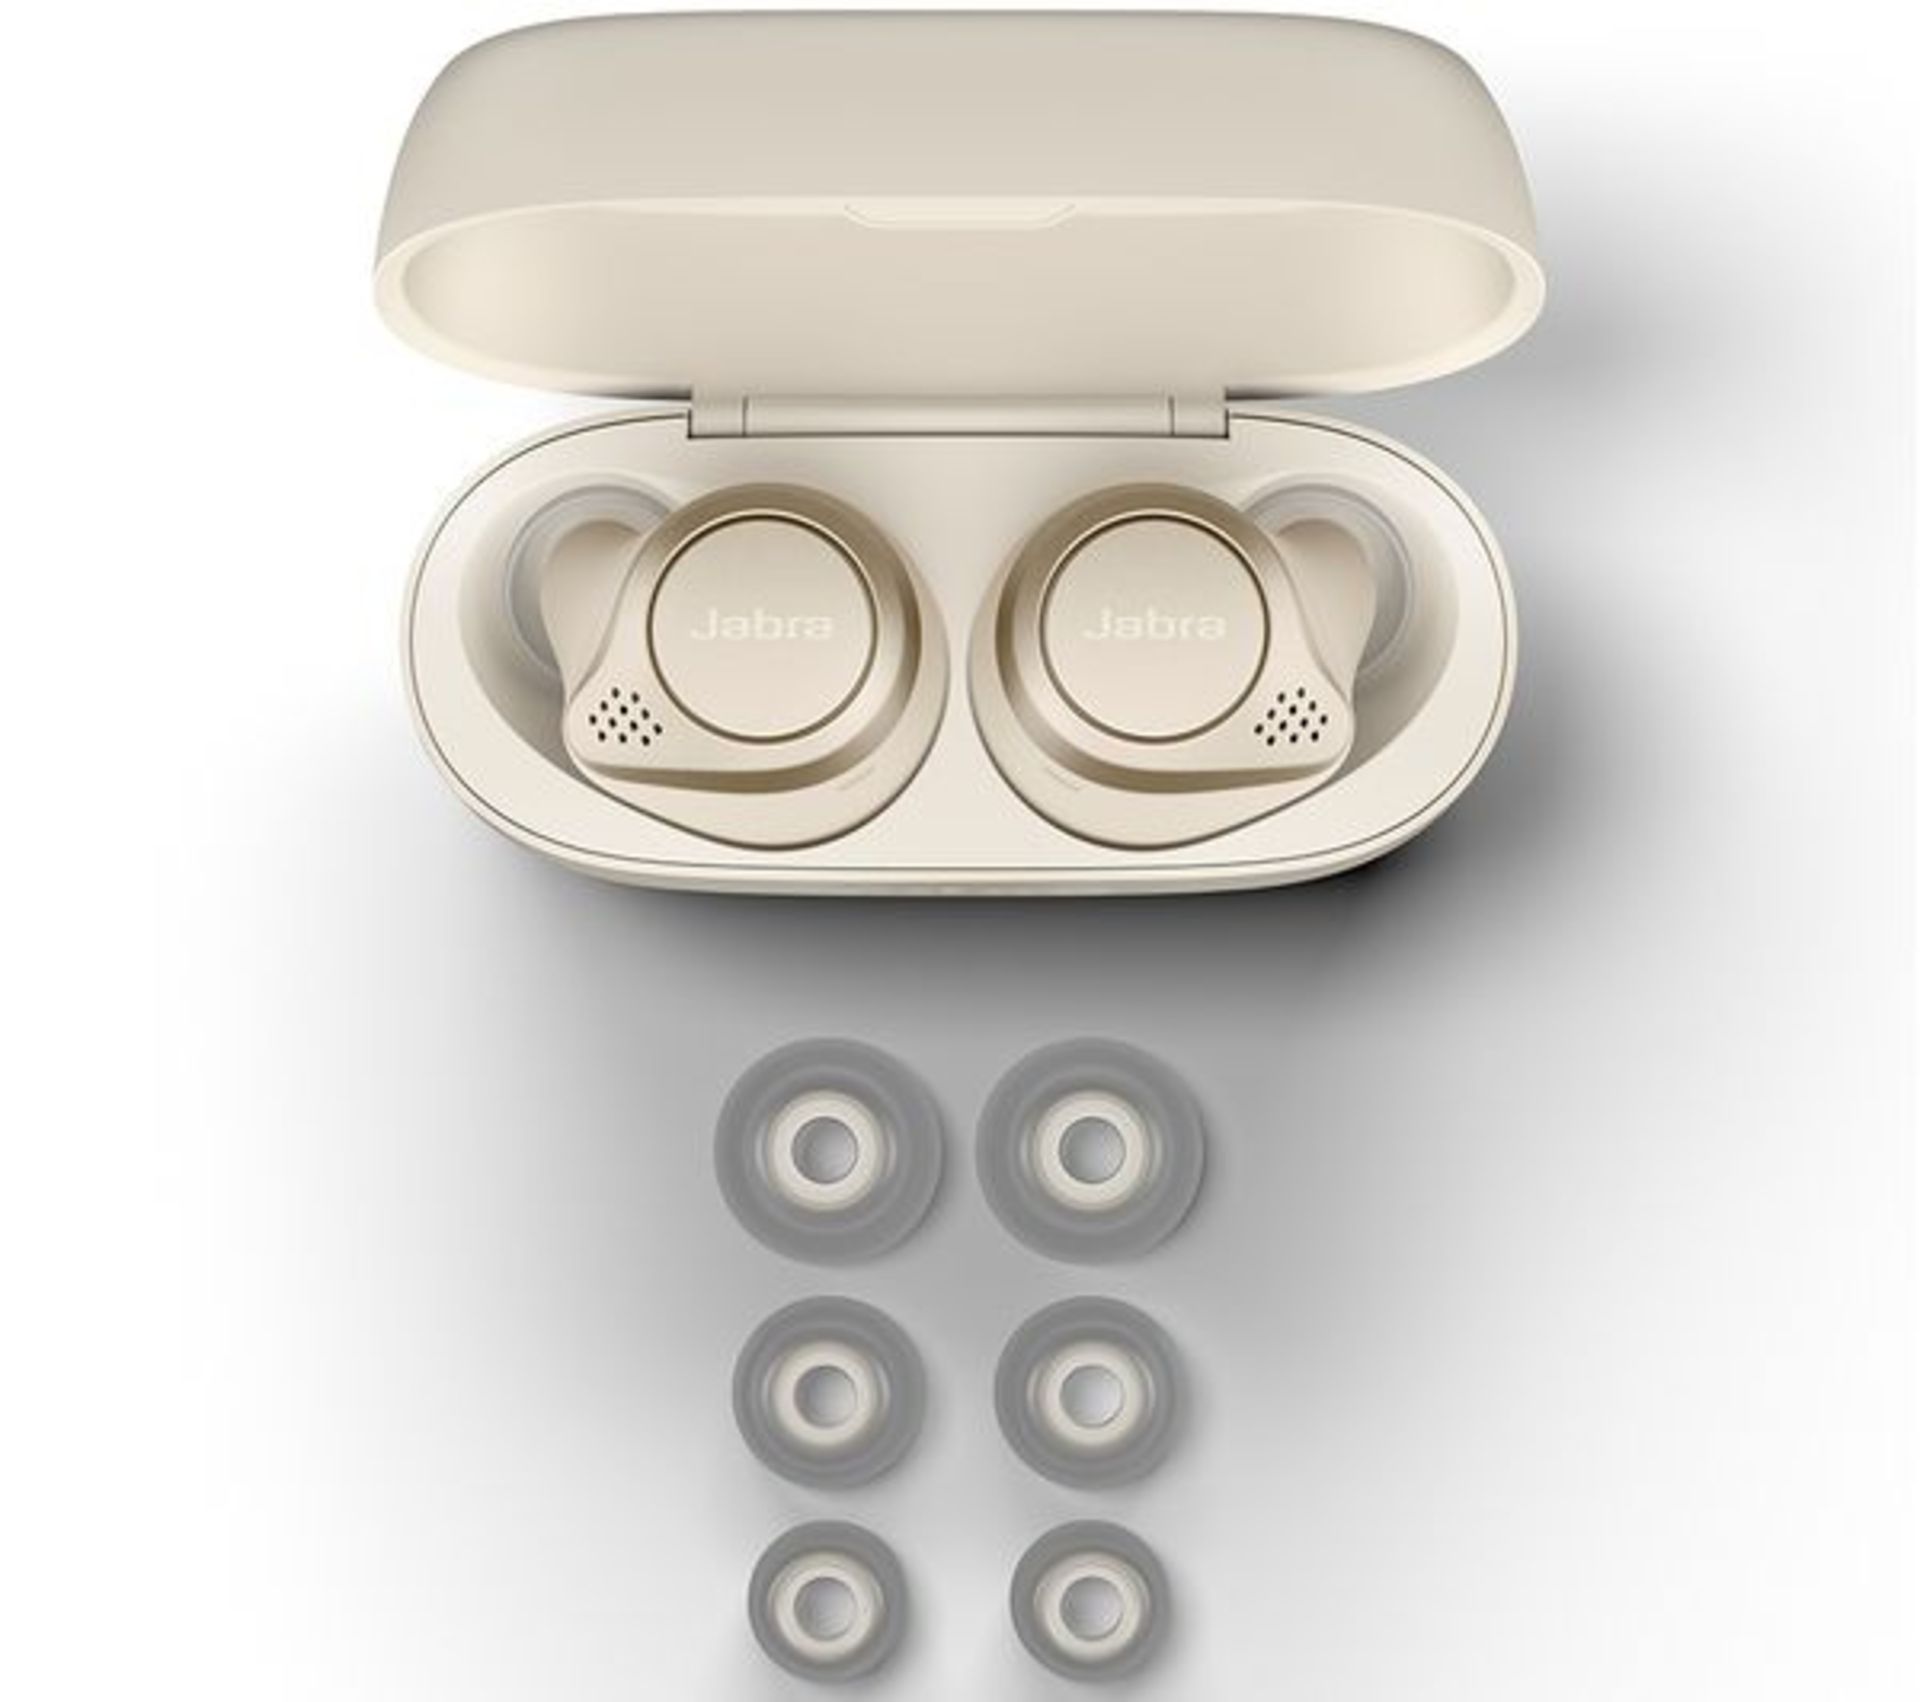 new jabra elite 75t wireless earbuds gold beige rrp £189.99 - Image 3 of 3